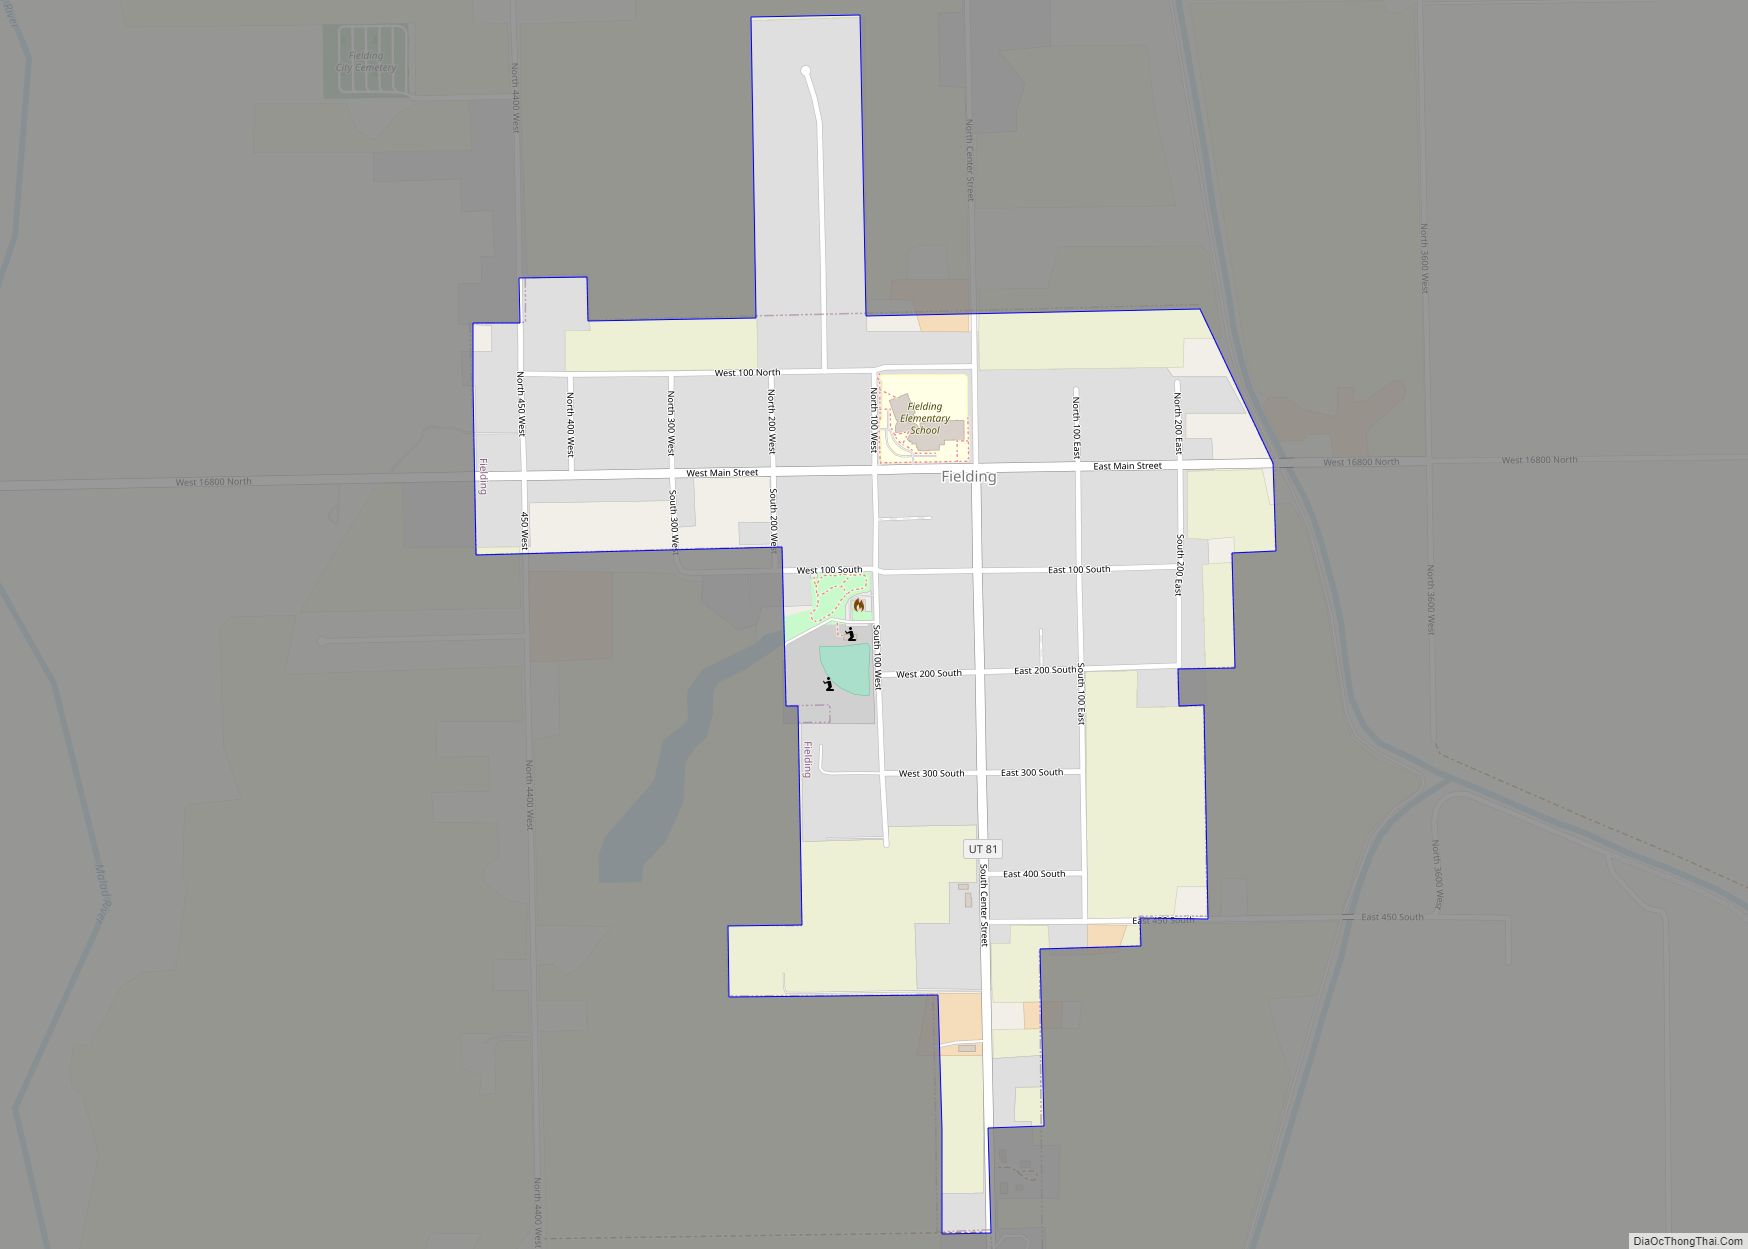 Map of Fielding town